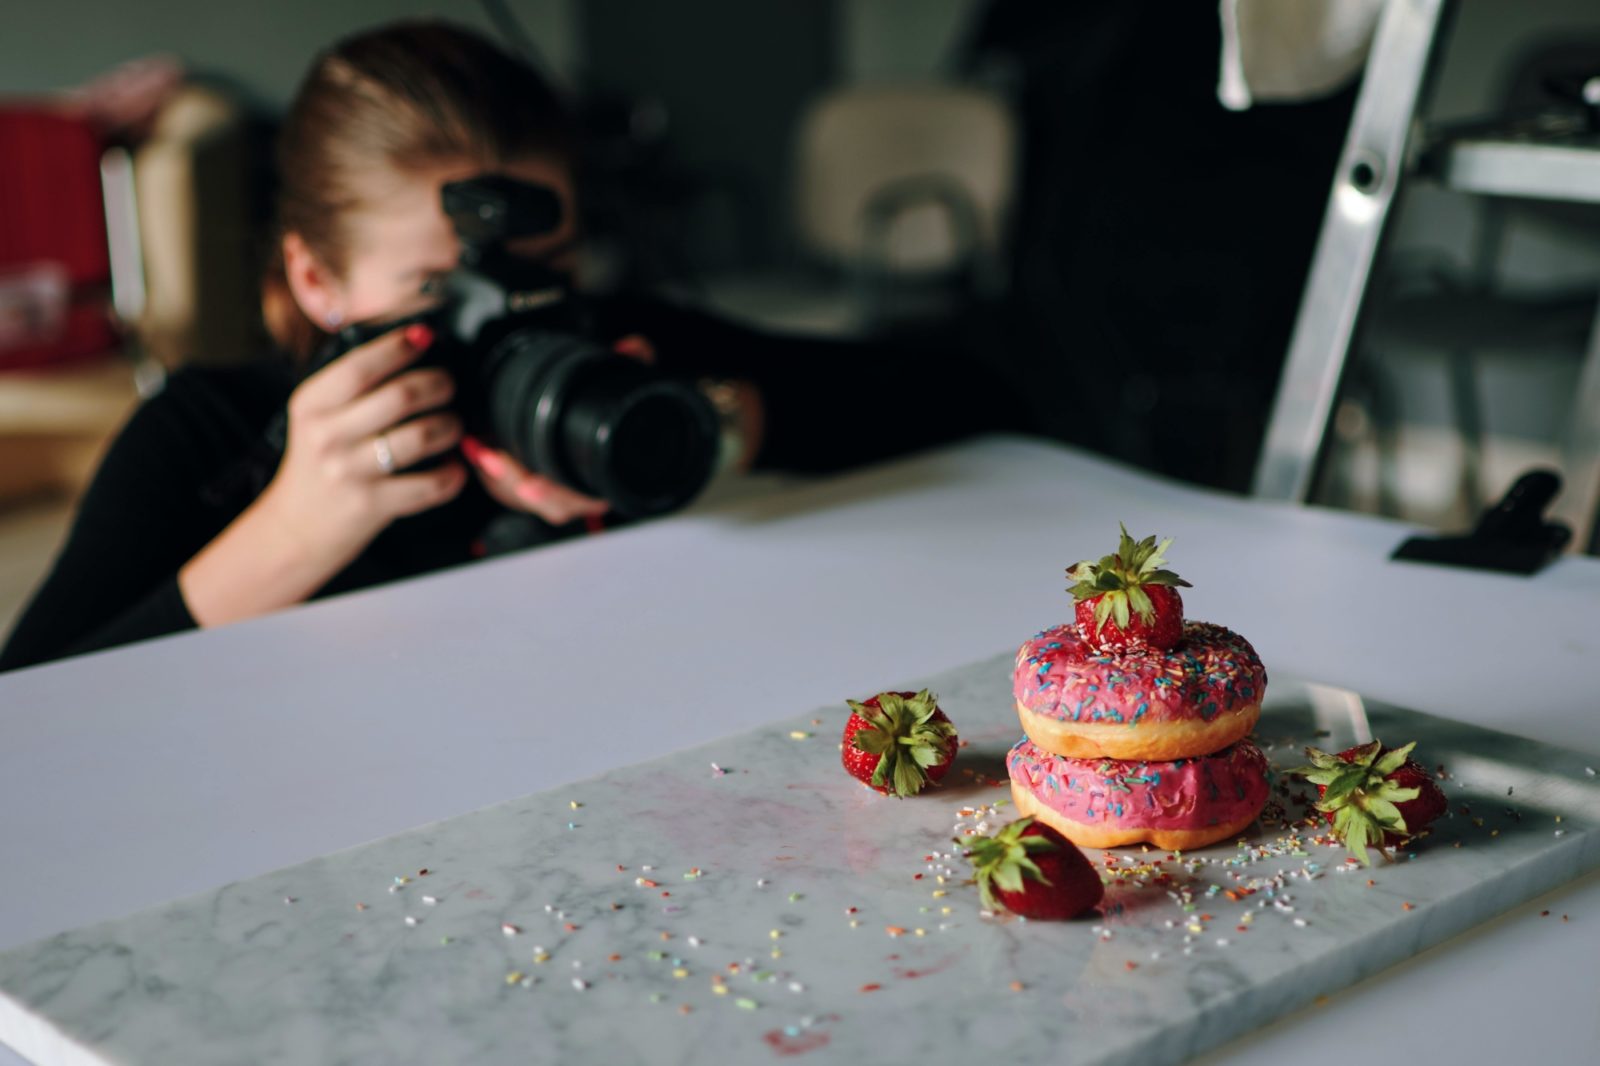 Purpose of hiring a food photographer